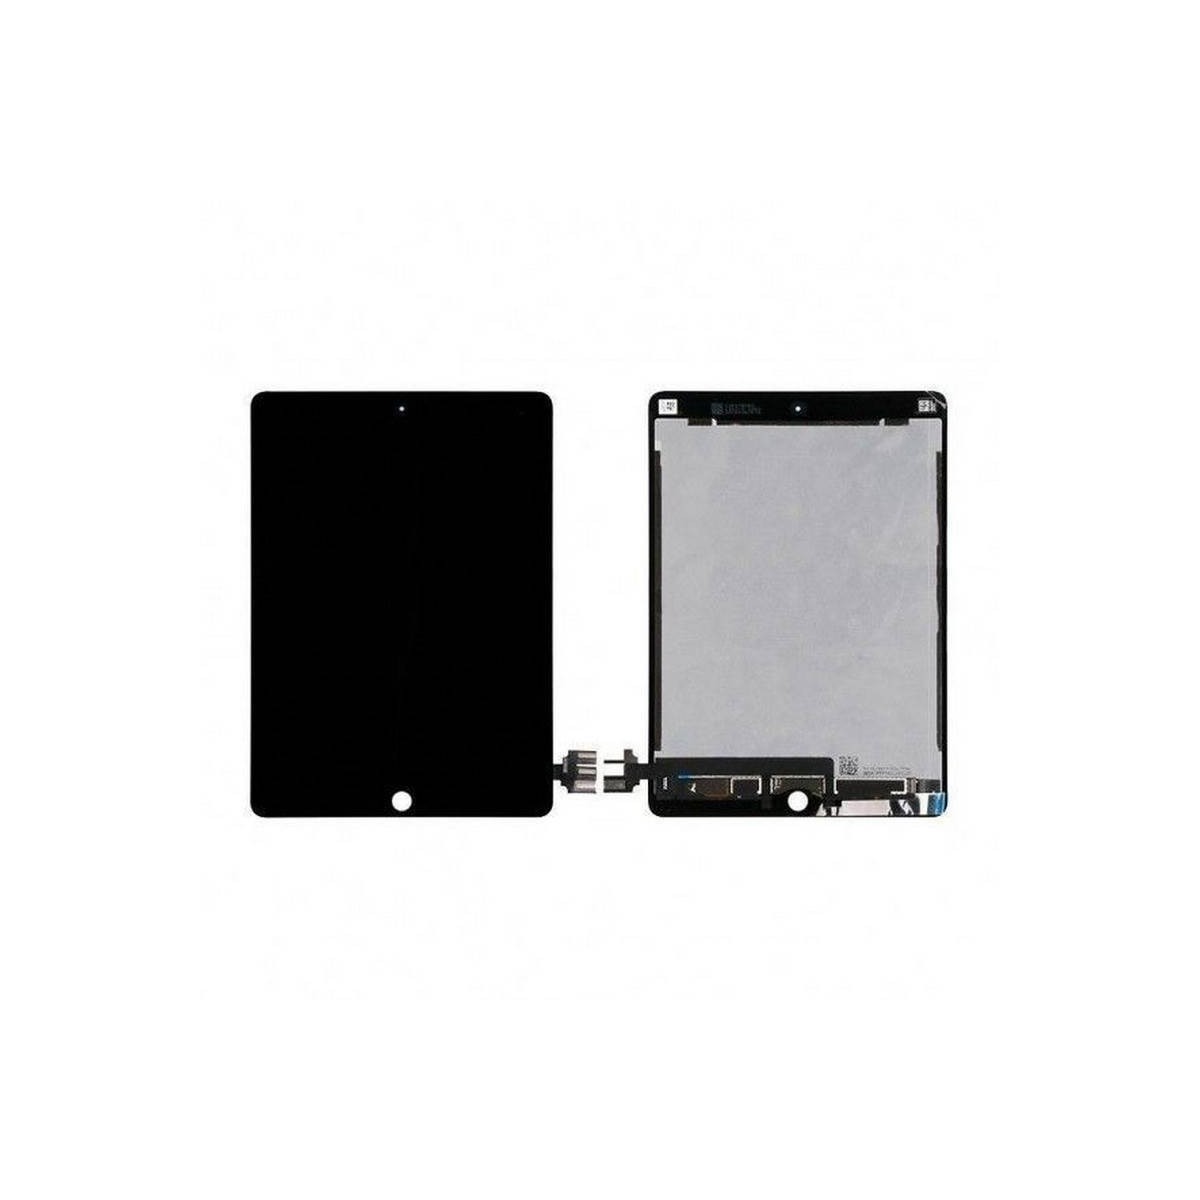 PANTALLA TACTIL LCD COMPLETA PARA IPAD PRO 12.9 VERSION 2015 Negro CON FLEX LCD 